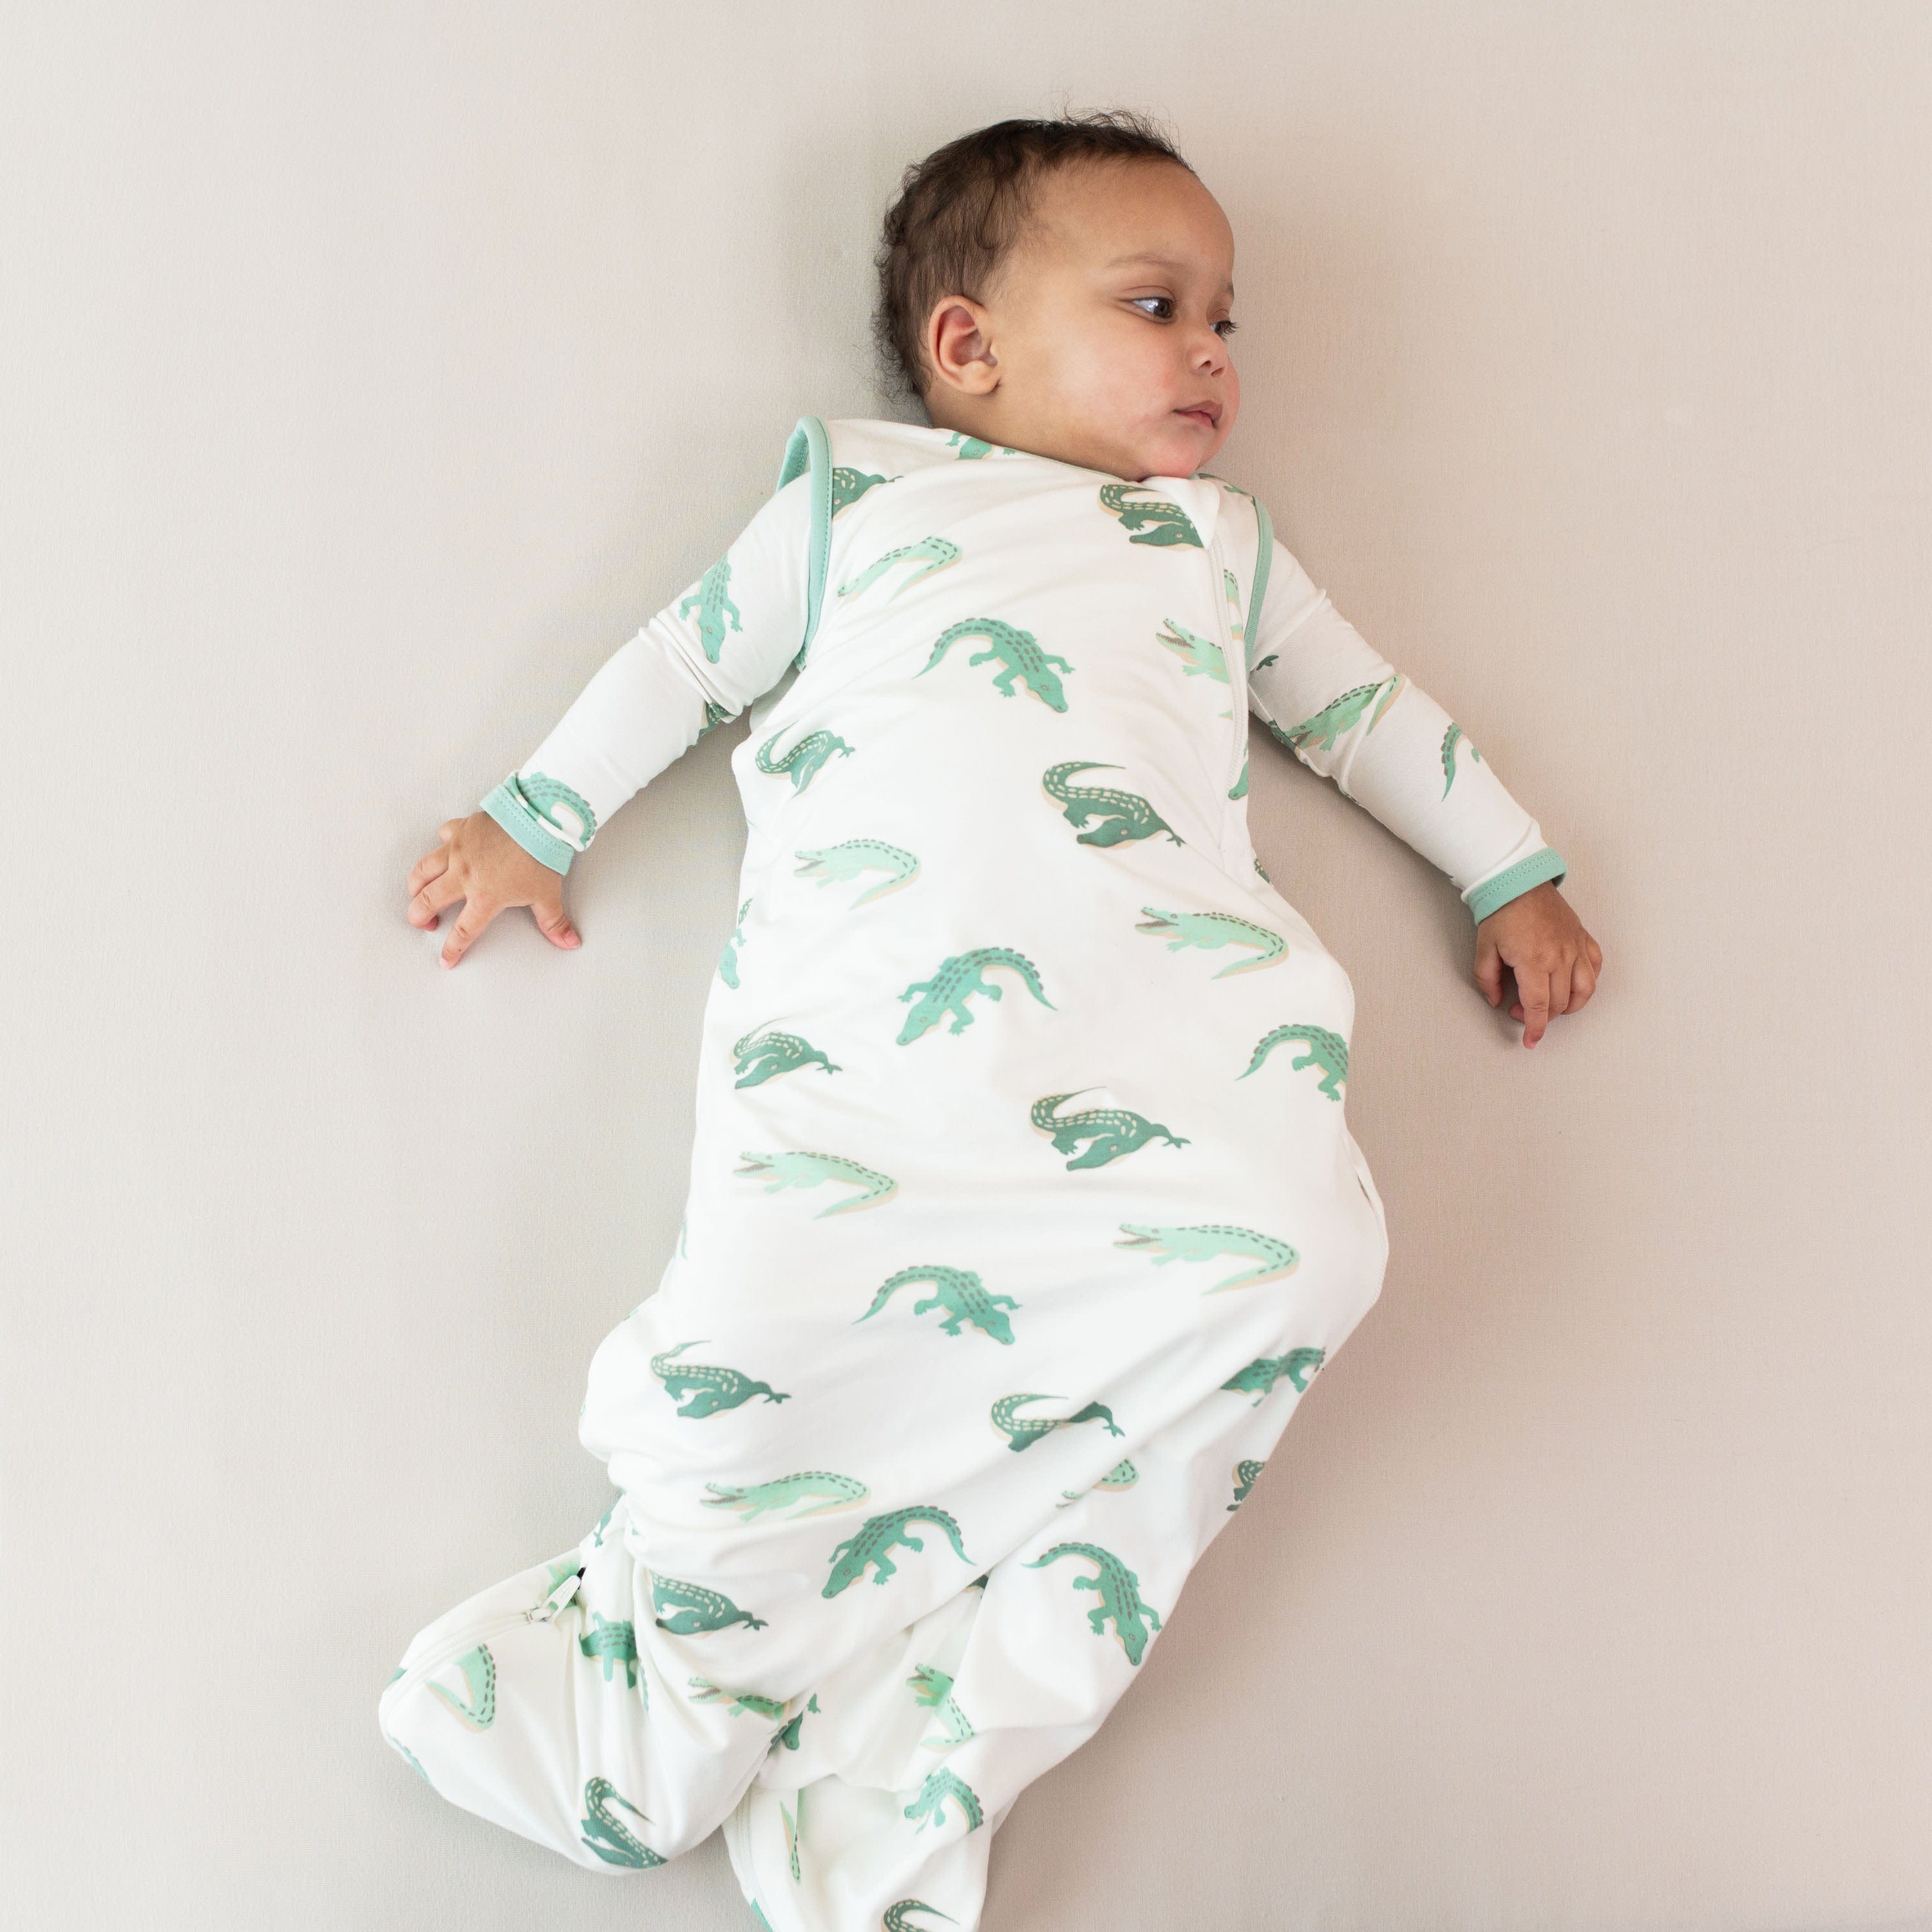 Infant wearing Kyte Baby Sleep Bag in Crocodile 0.5